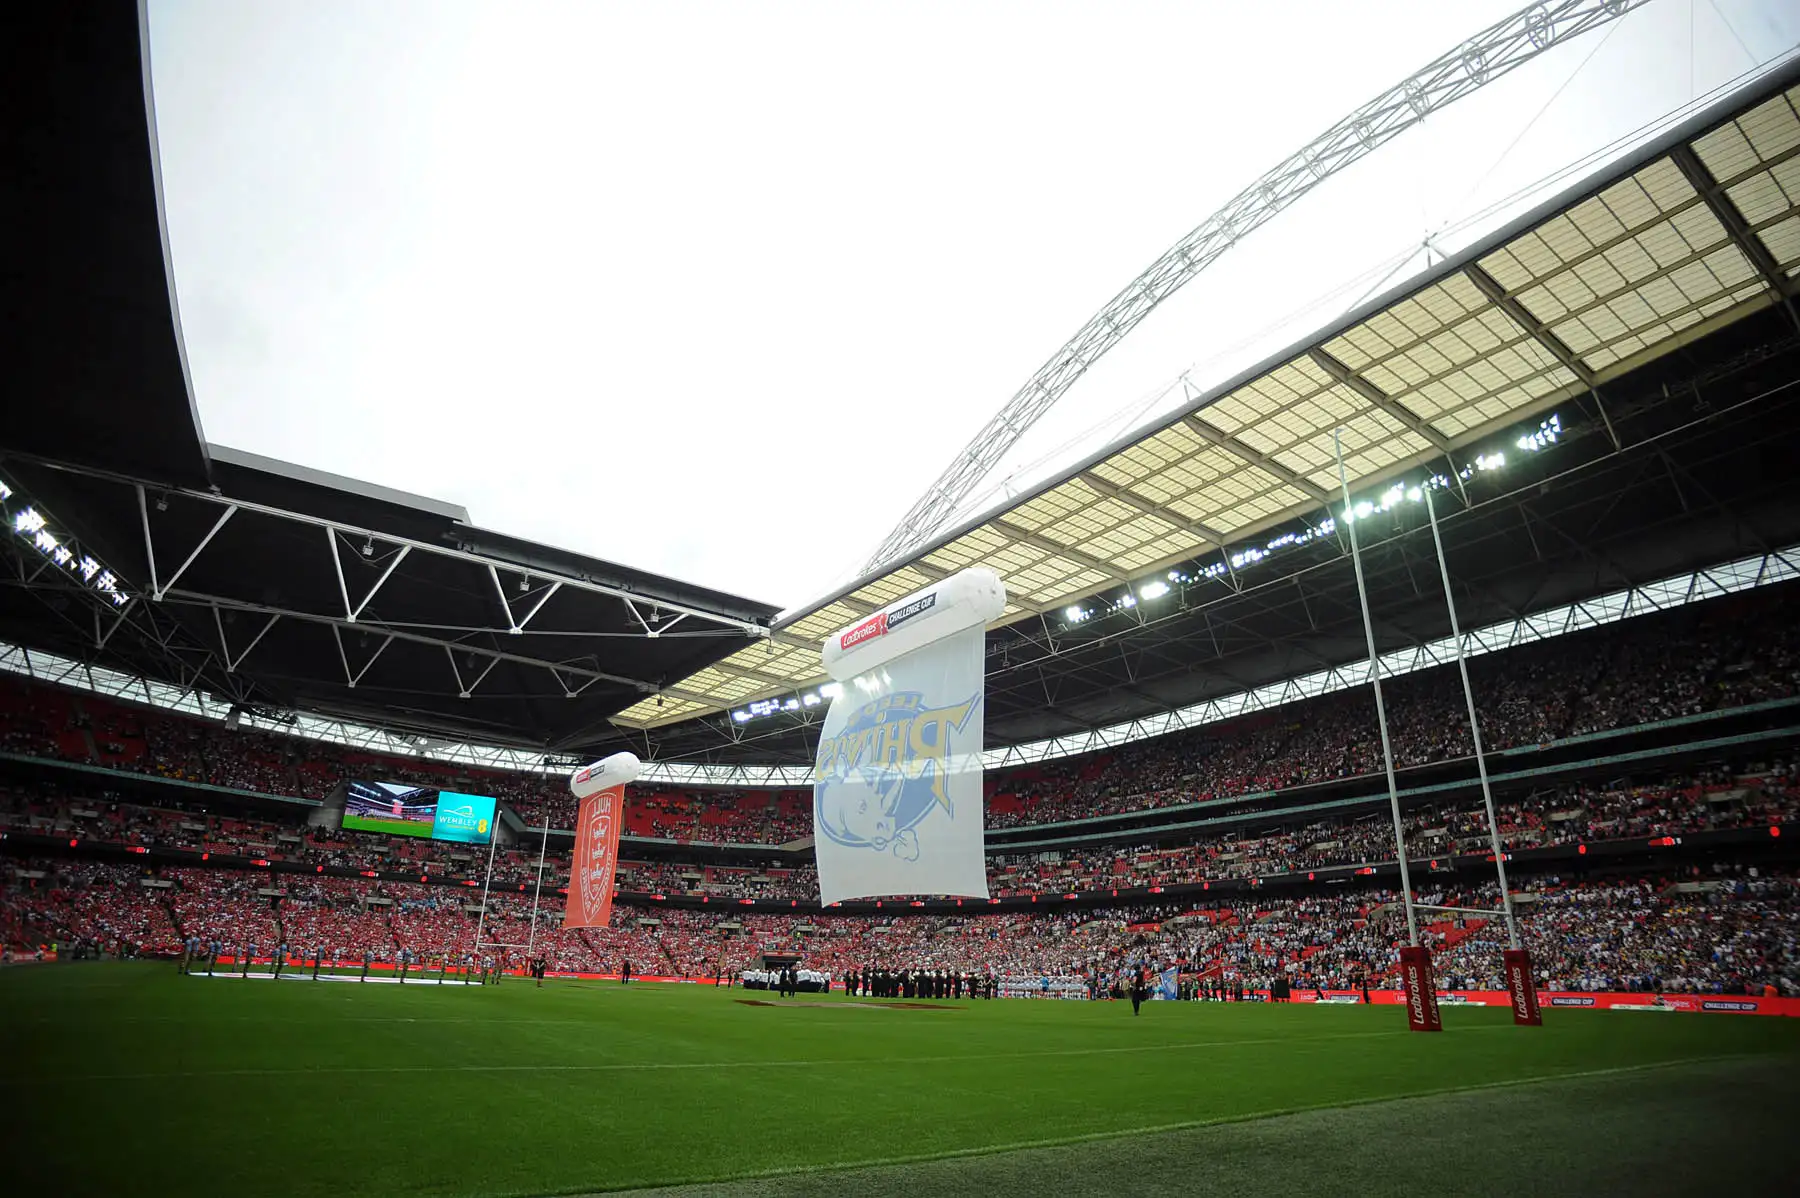 Wembley sale would not affect Challenge Cup Final